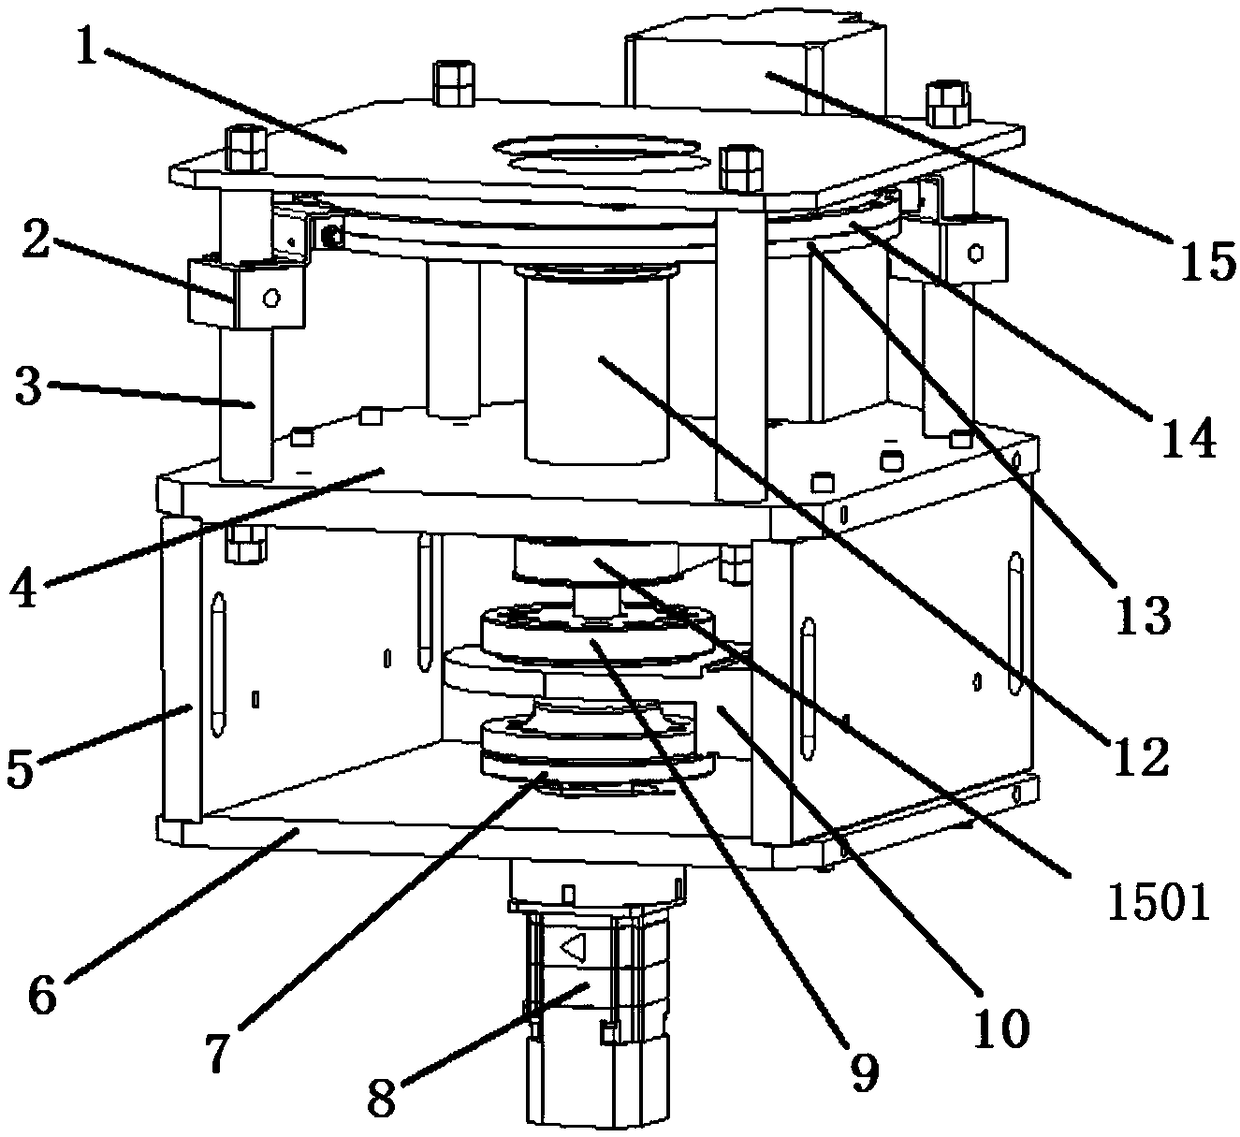 Transmission test apparatus based on circular grating